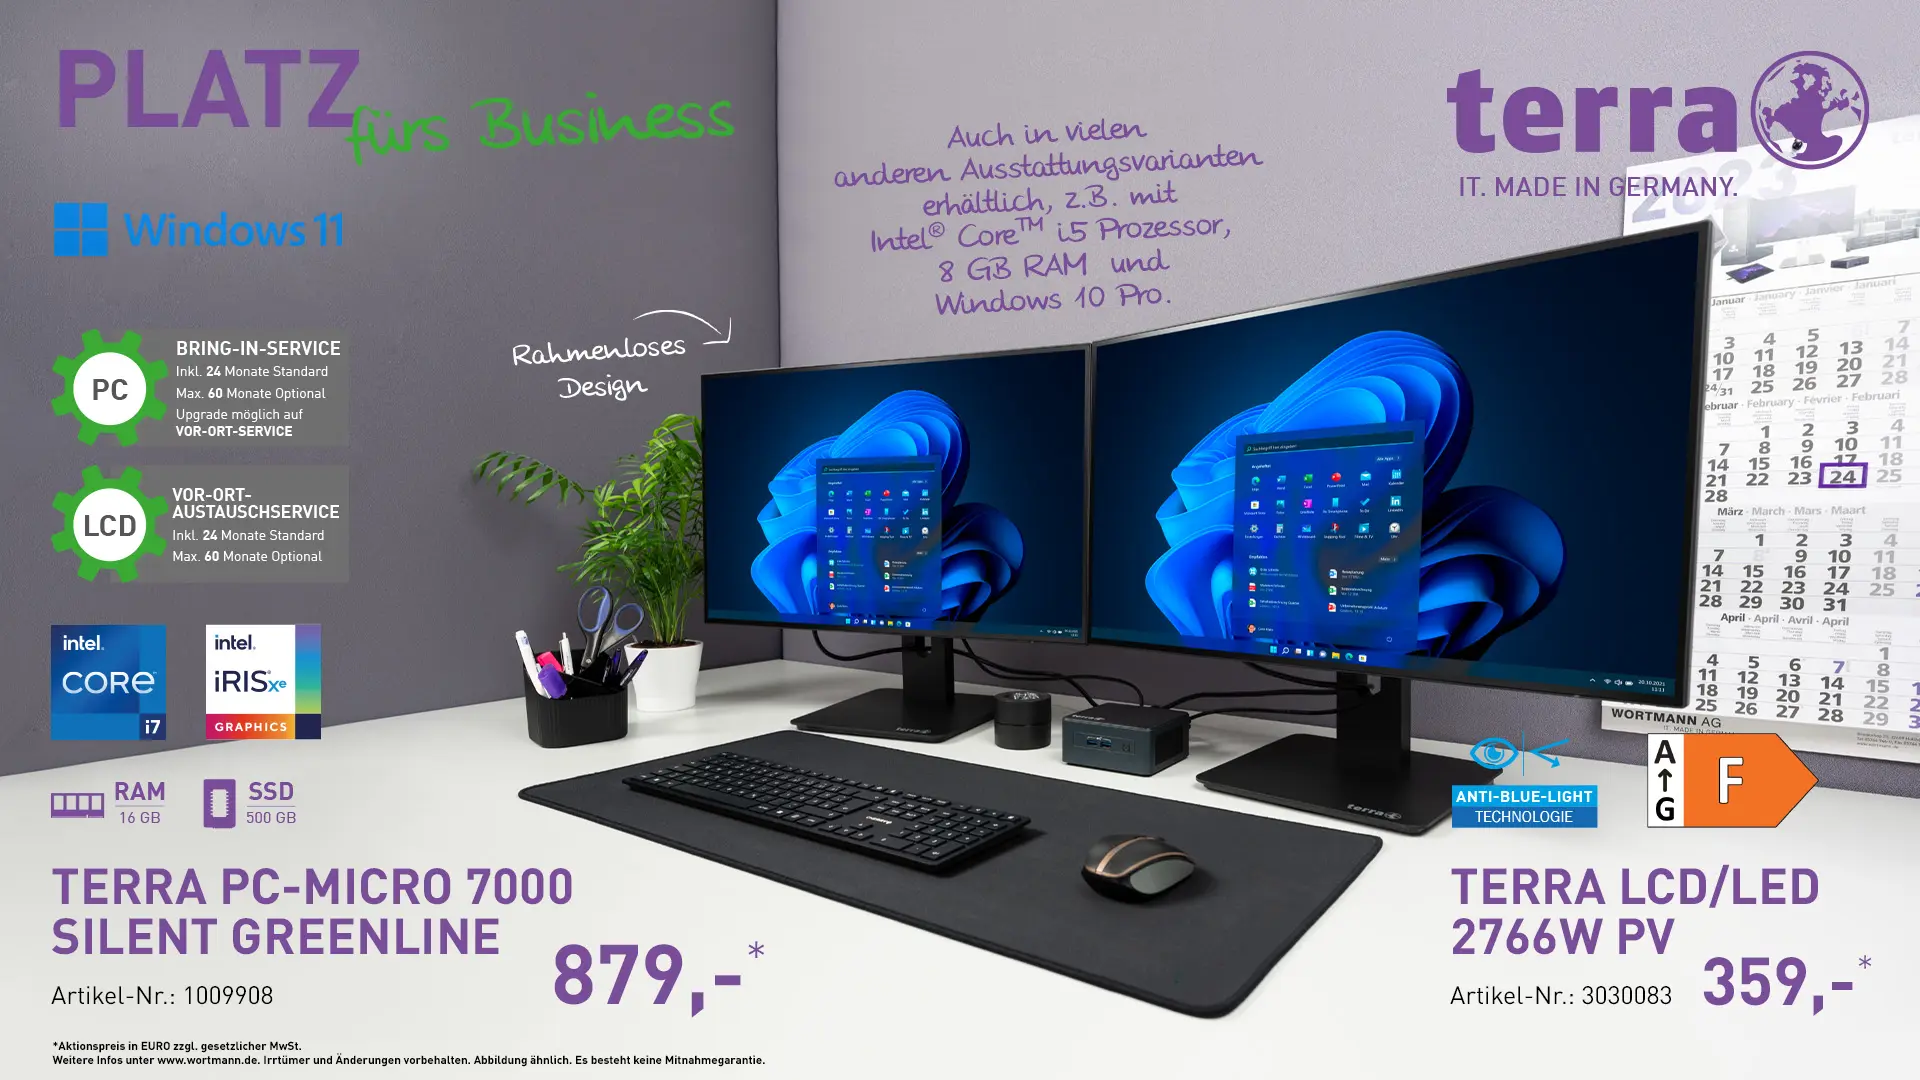 Terra PC-Micro 7000 Silent Greenline & Terra LCD/LED 2766W PV